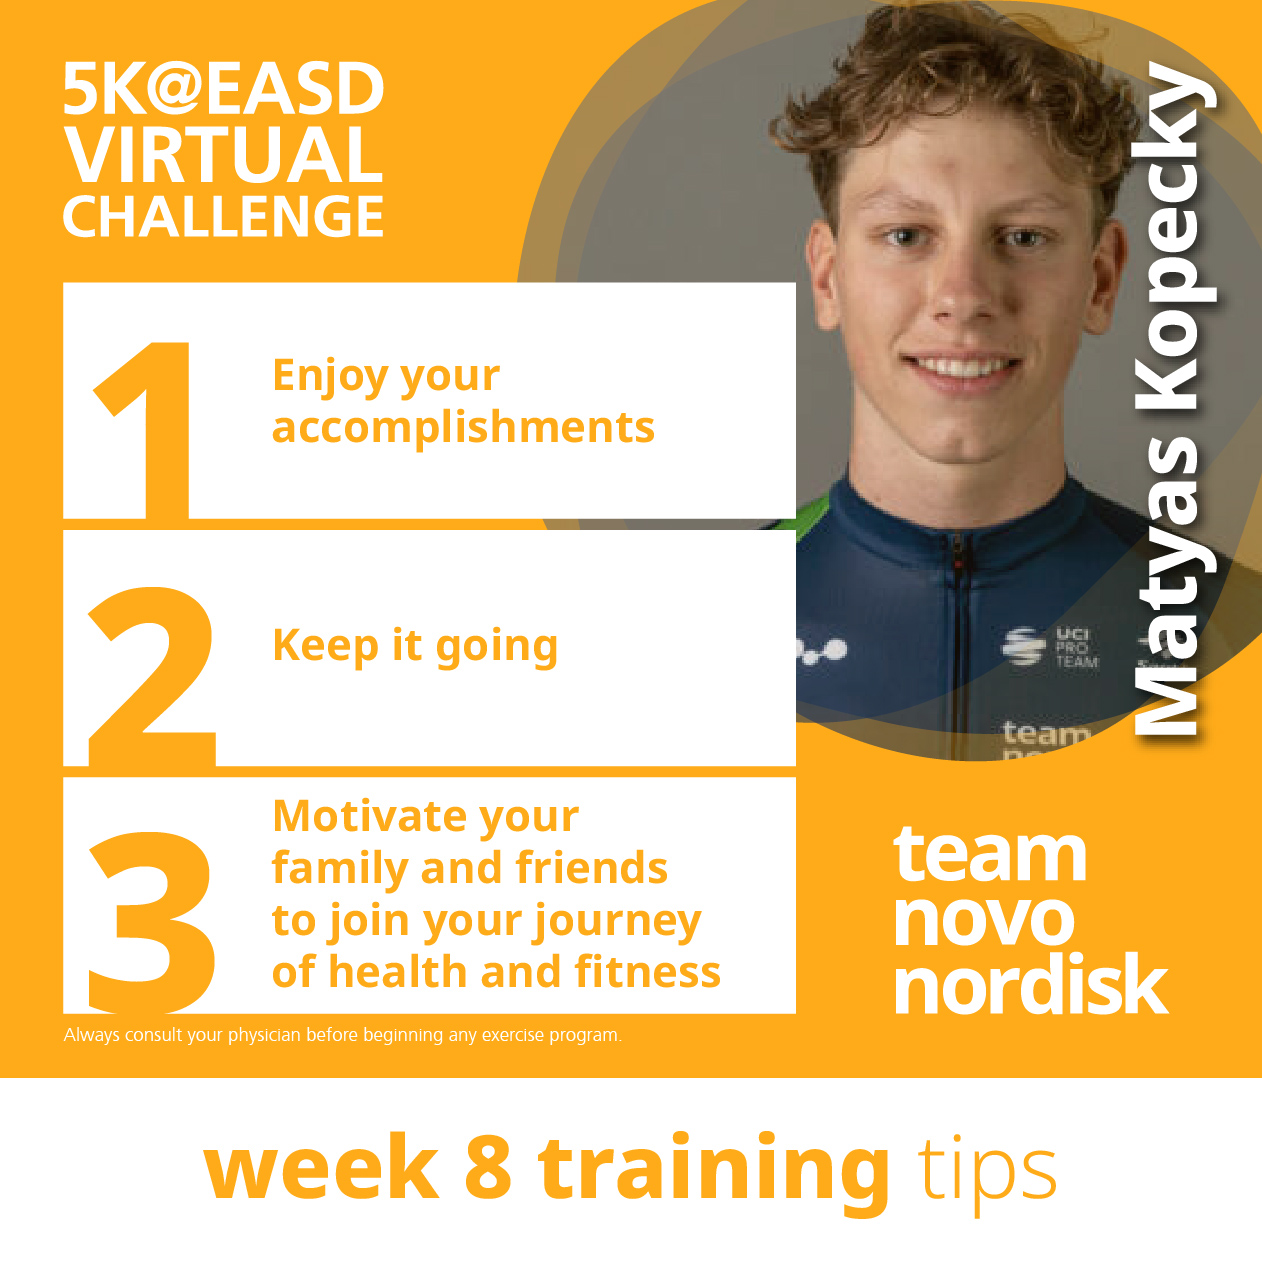 5K Training Plans Week 8 Tips